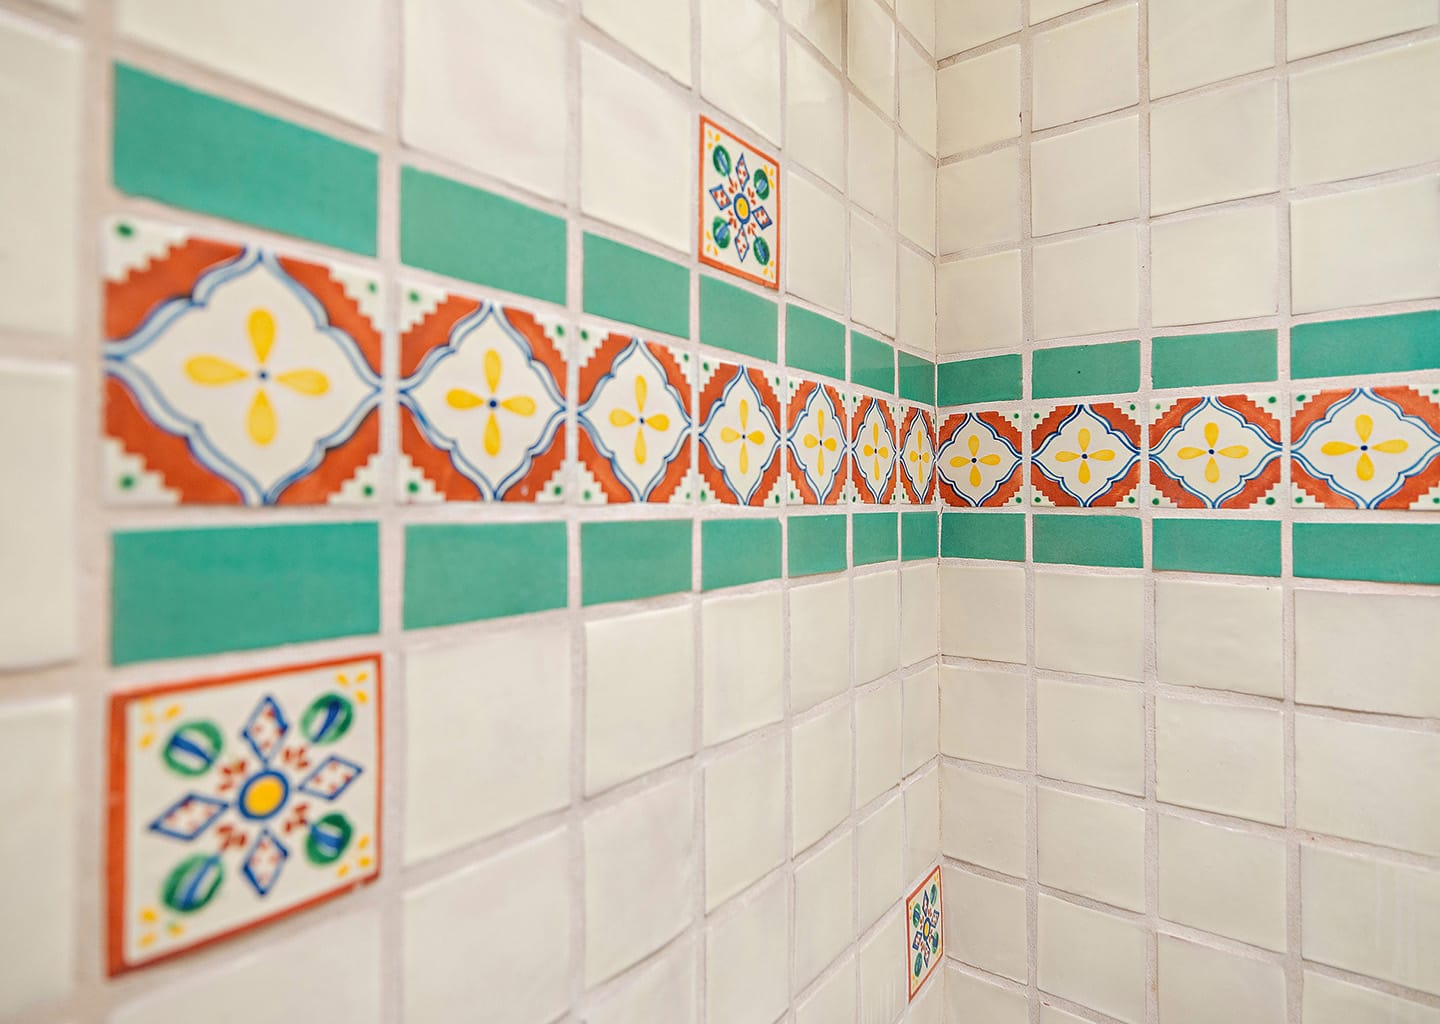 Bathroom 2 with Bathtub/Shower Combo